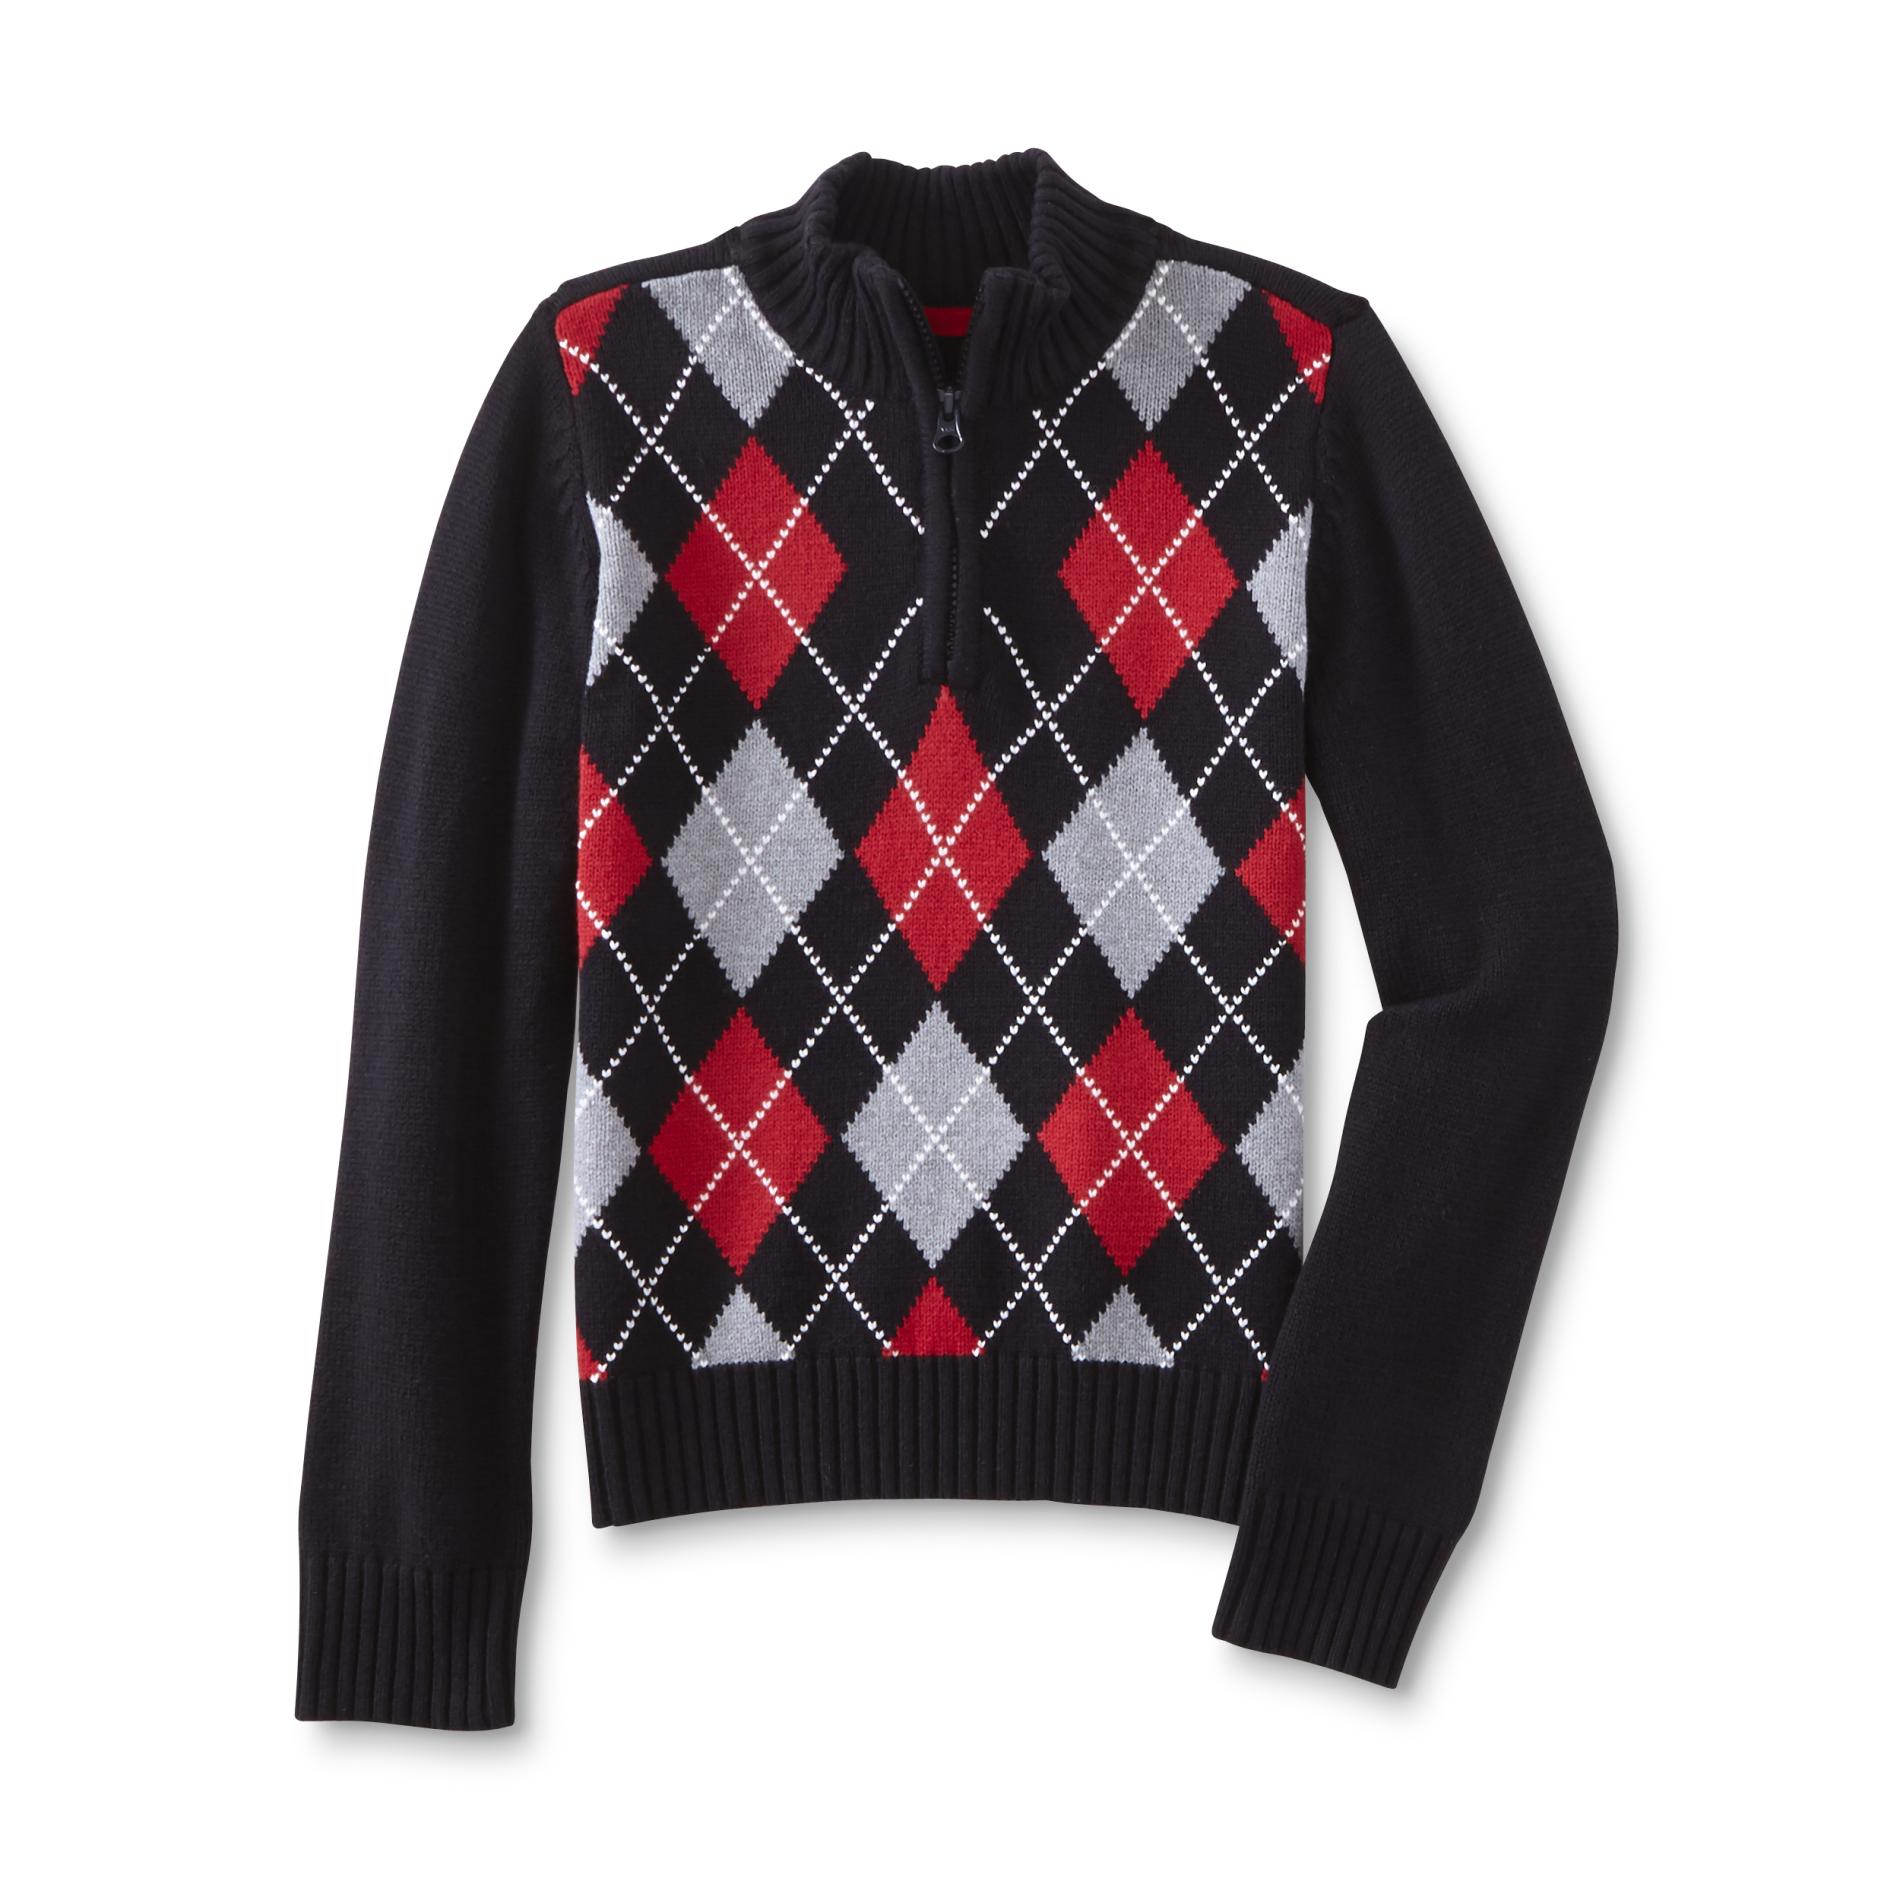 Toughskins Boys' Quarter-Zip Sweater - Argyle